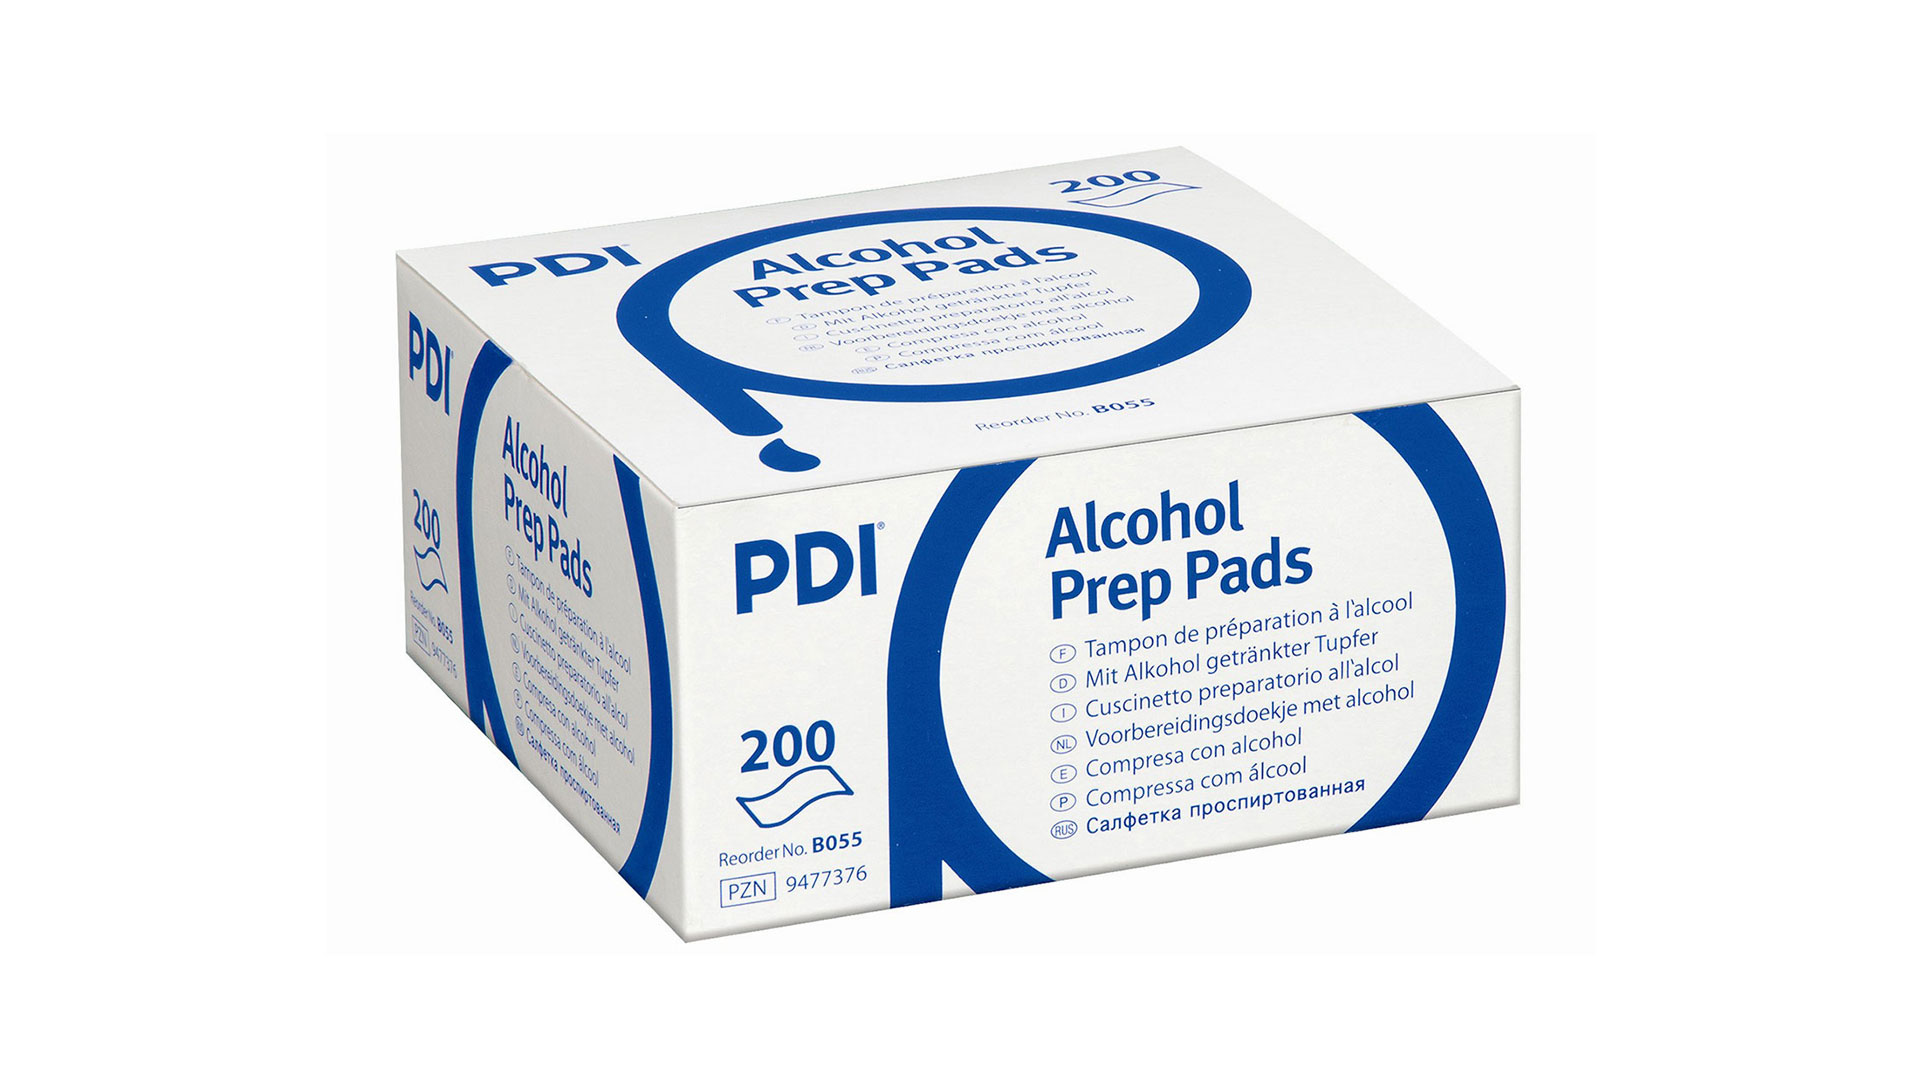 PDI Alcohol Prep Pads - Pack of 200